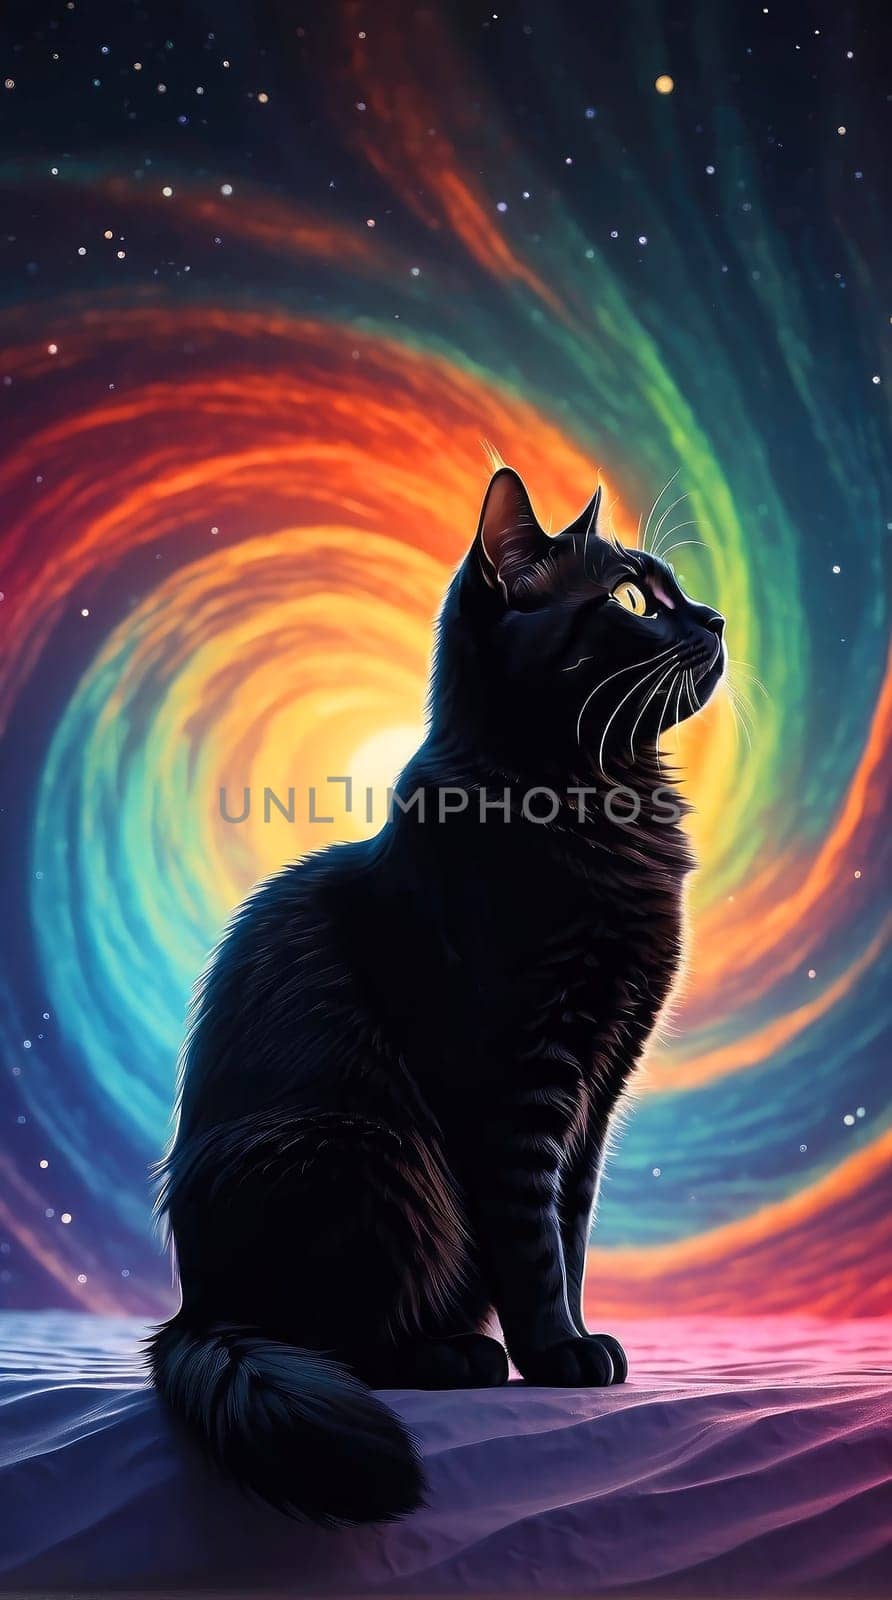 Black cat in neon rays by applesstock